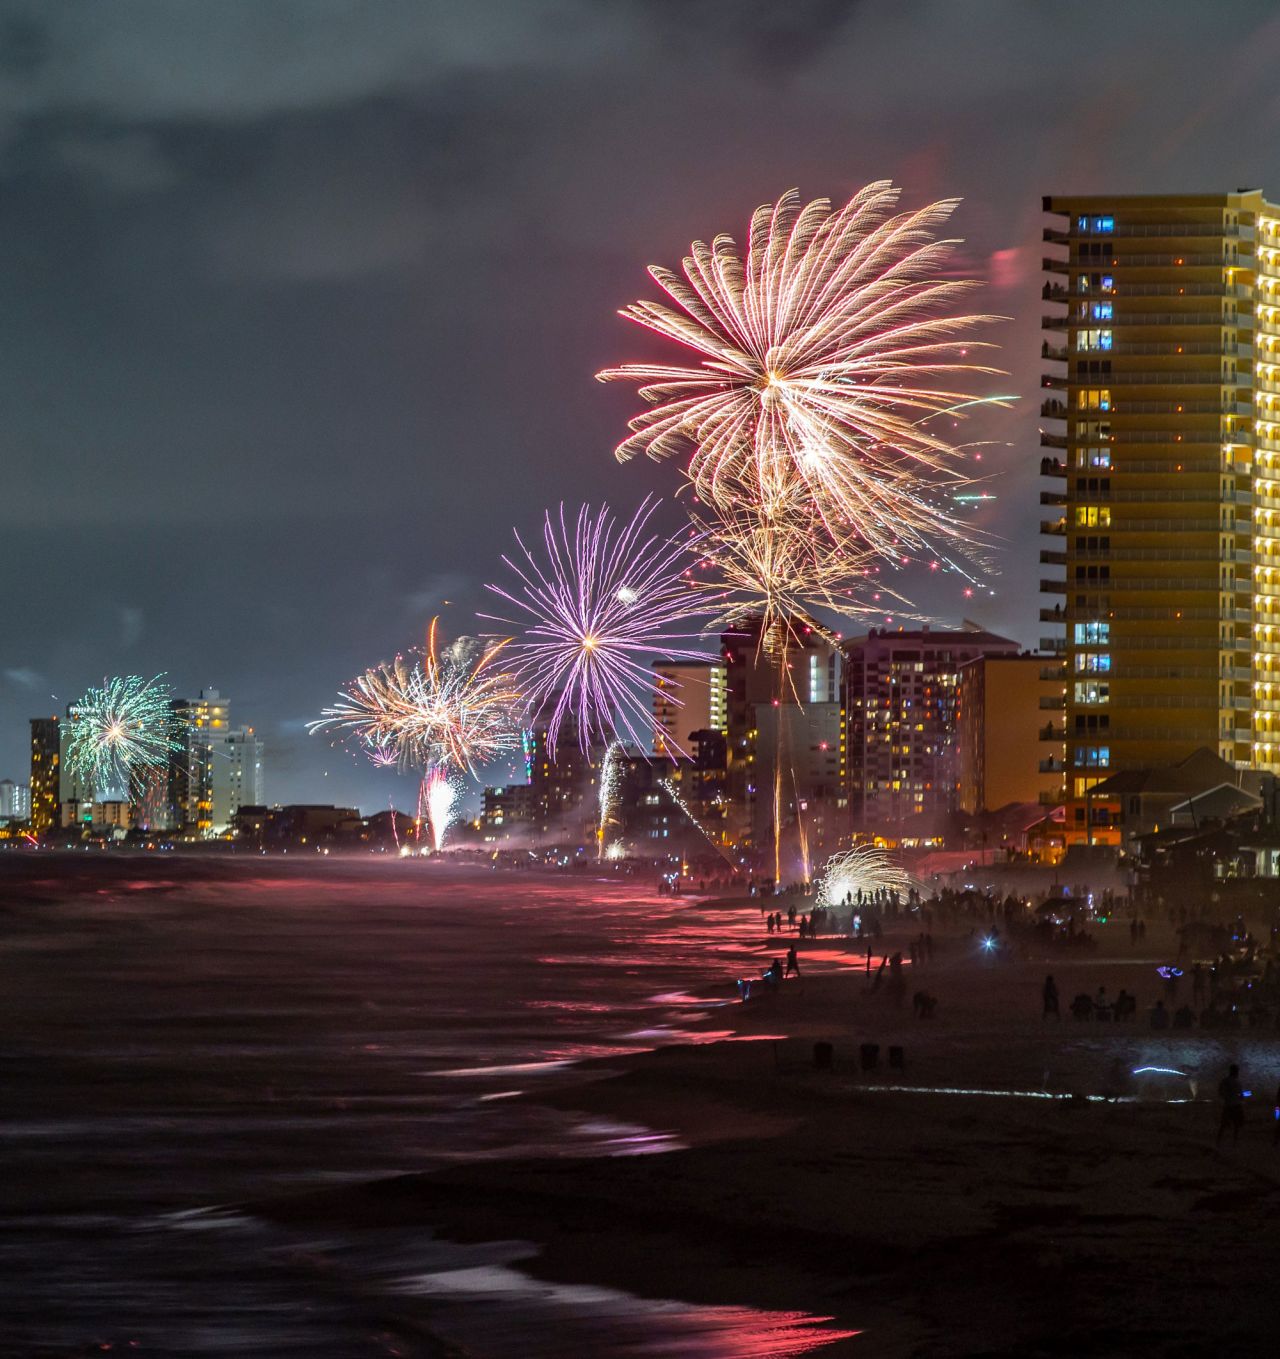 Panama City Beach, Florida, celebrates with fireworks all along the 27-mile stretch of sand Sunday night.